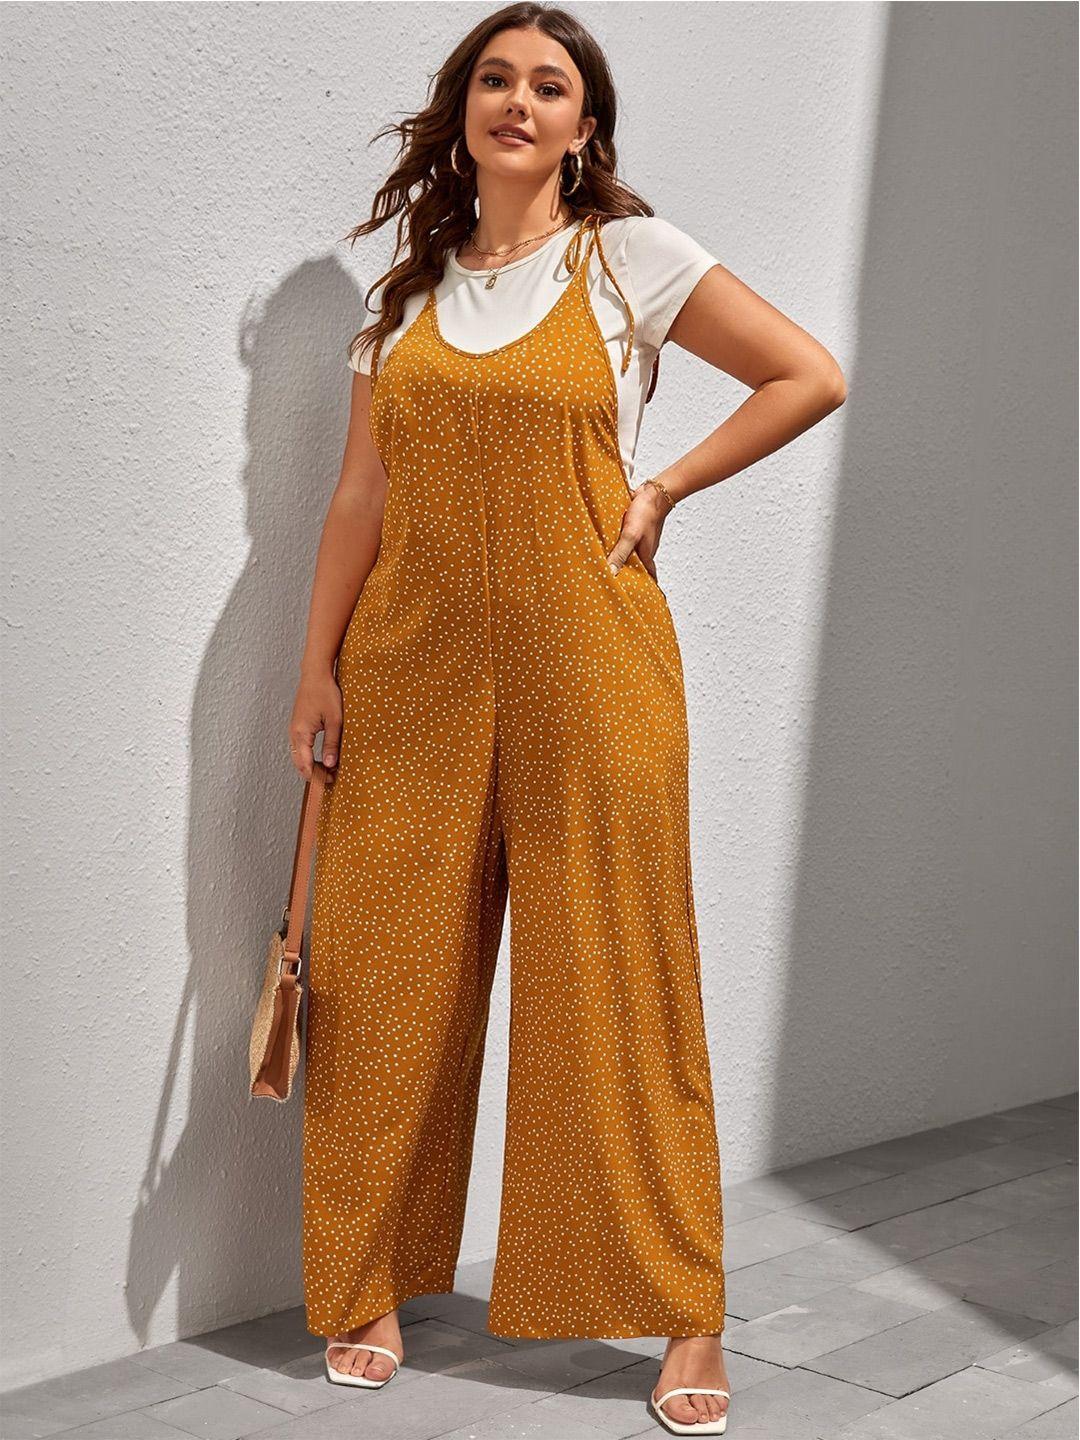 stylecast x kpop orange polka dots printed sleeveless basic jumpsuit